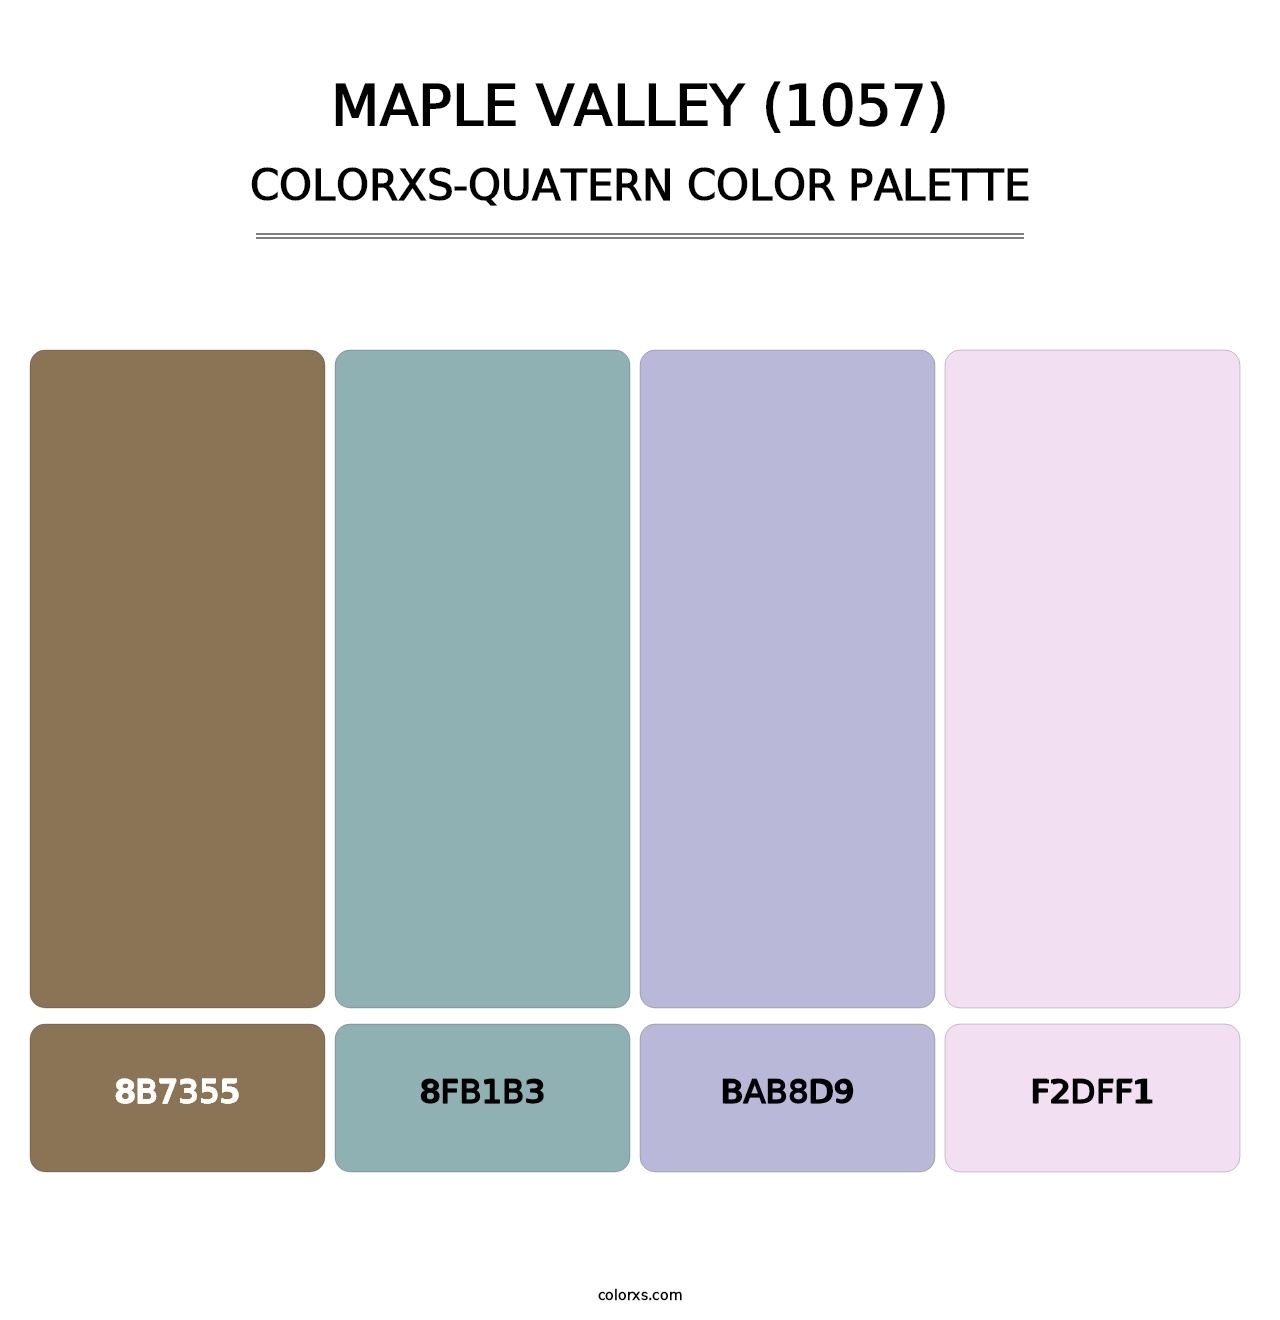 Maple Valley (1057) - Colorxs Quatern Palette